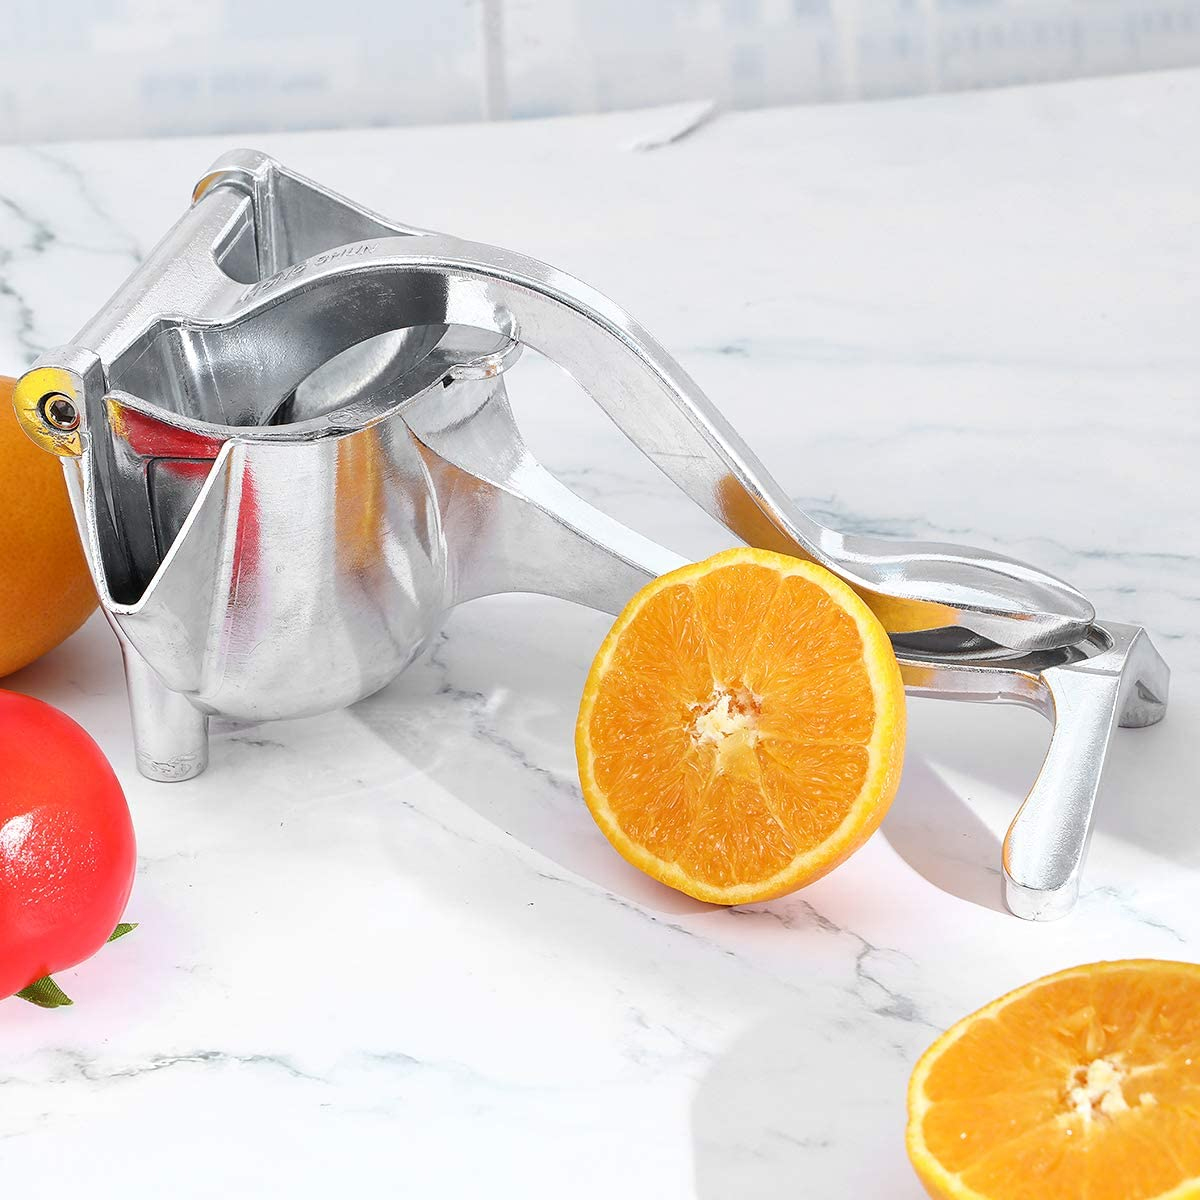 Lemon-Orange-Fruit-Juicer-Manual-Juice-Squeezer-Hand-Press-Machine-Kitchen-Home-1794089-5